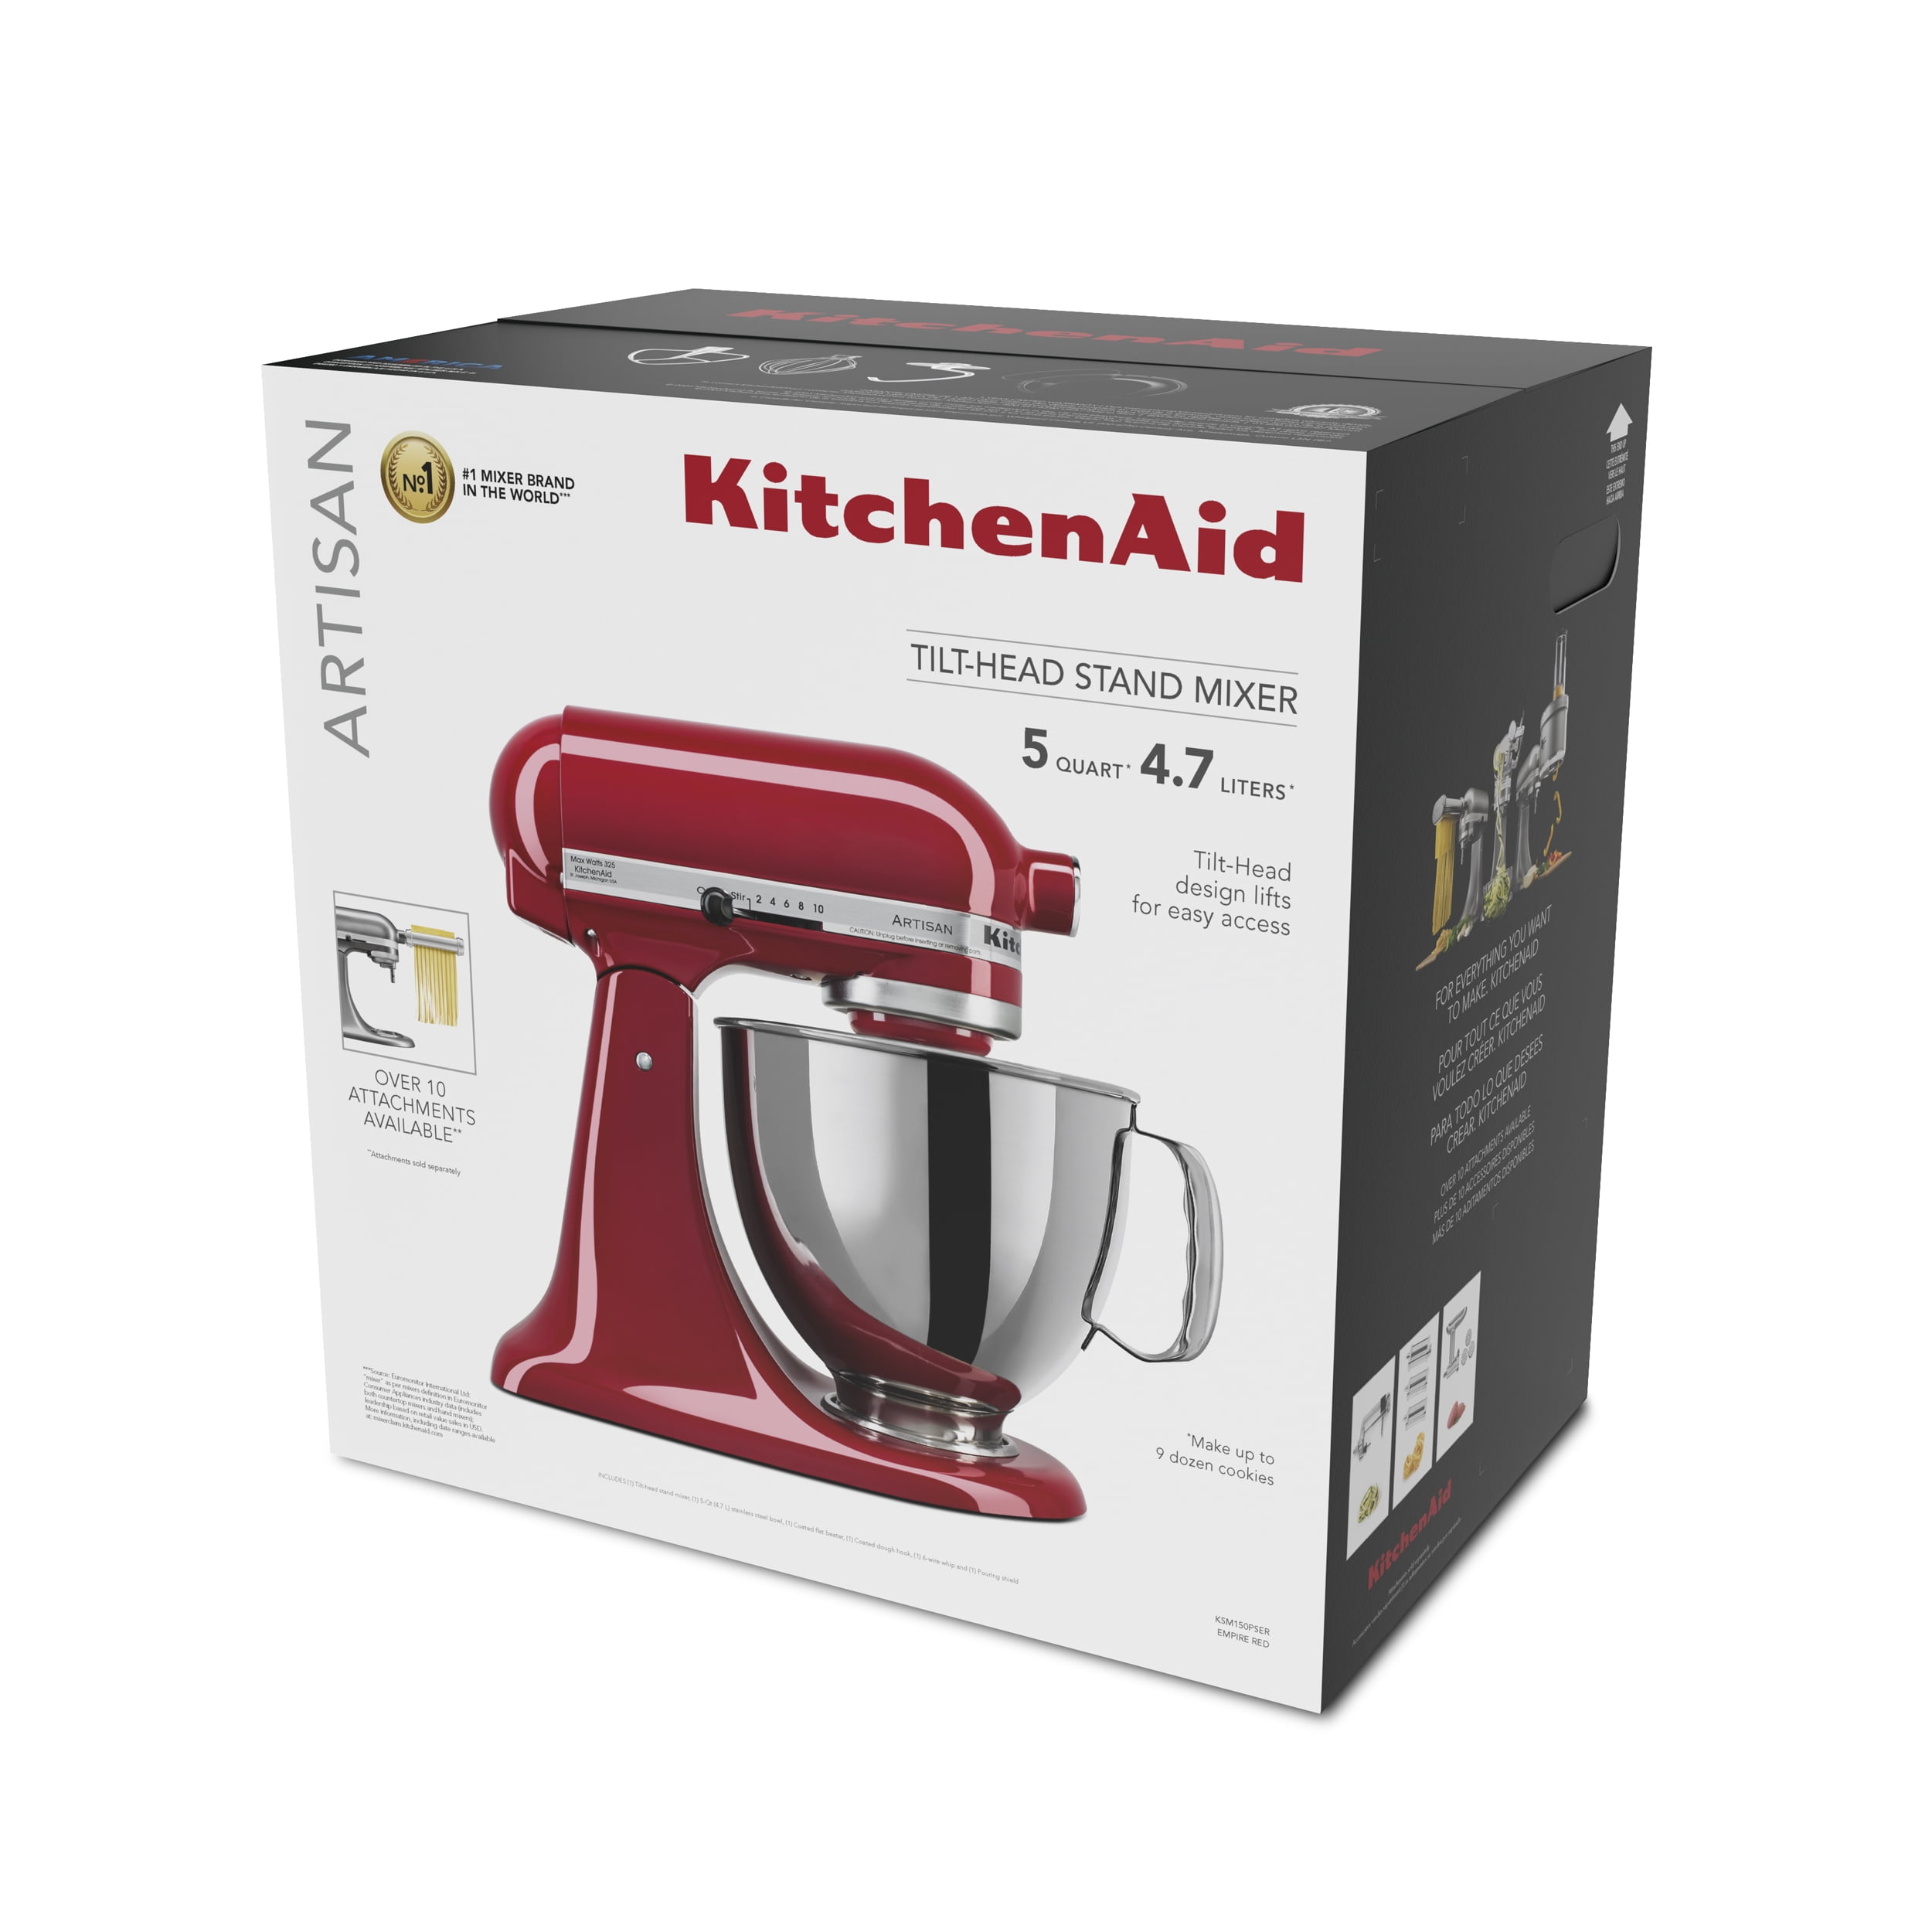 KitchenAid Artisan Series 5-Quart Tilt-Head Stand Mixer - KSM150PS 